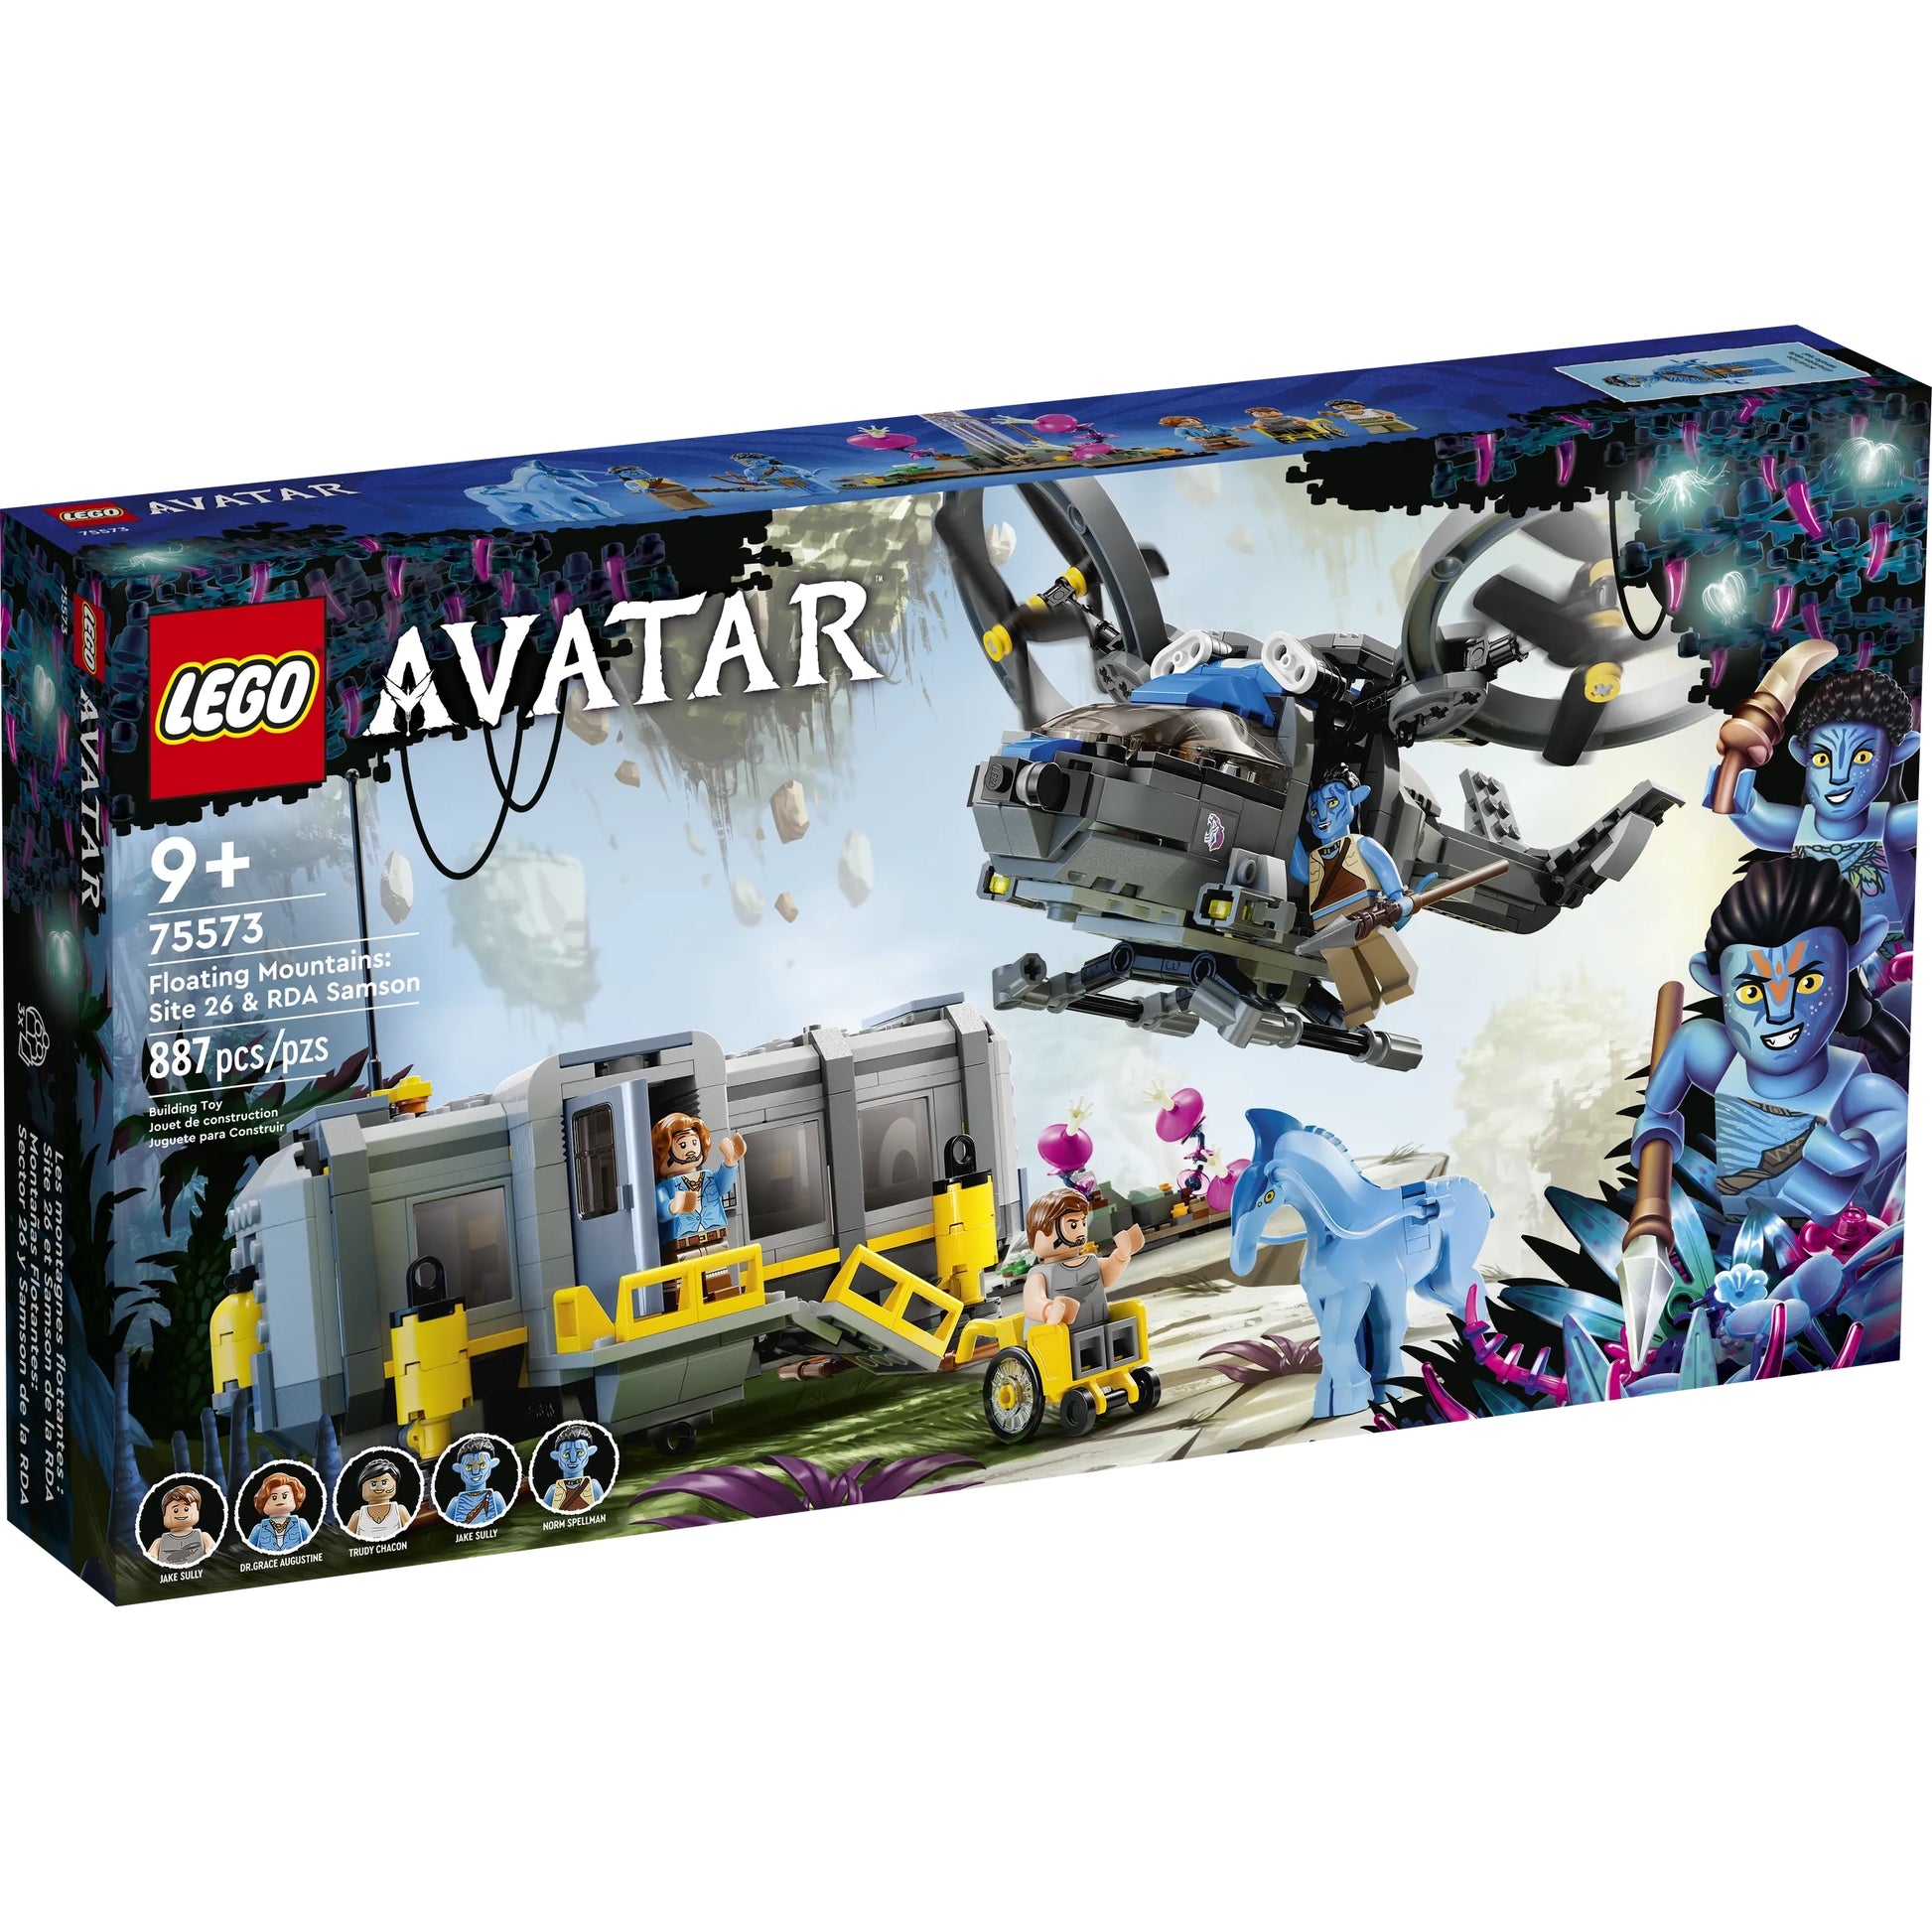 Lego Avatar Floating Mountains: Site 26 & RDA Samson 75573 – Sam